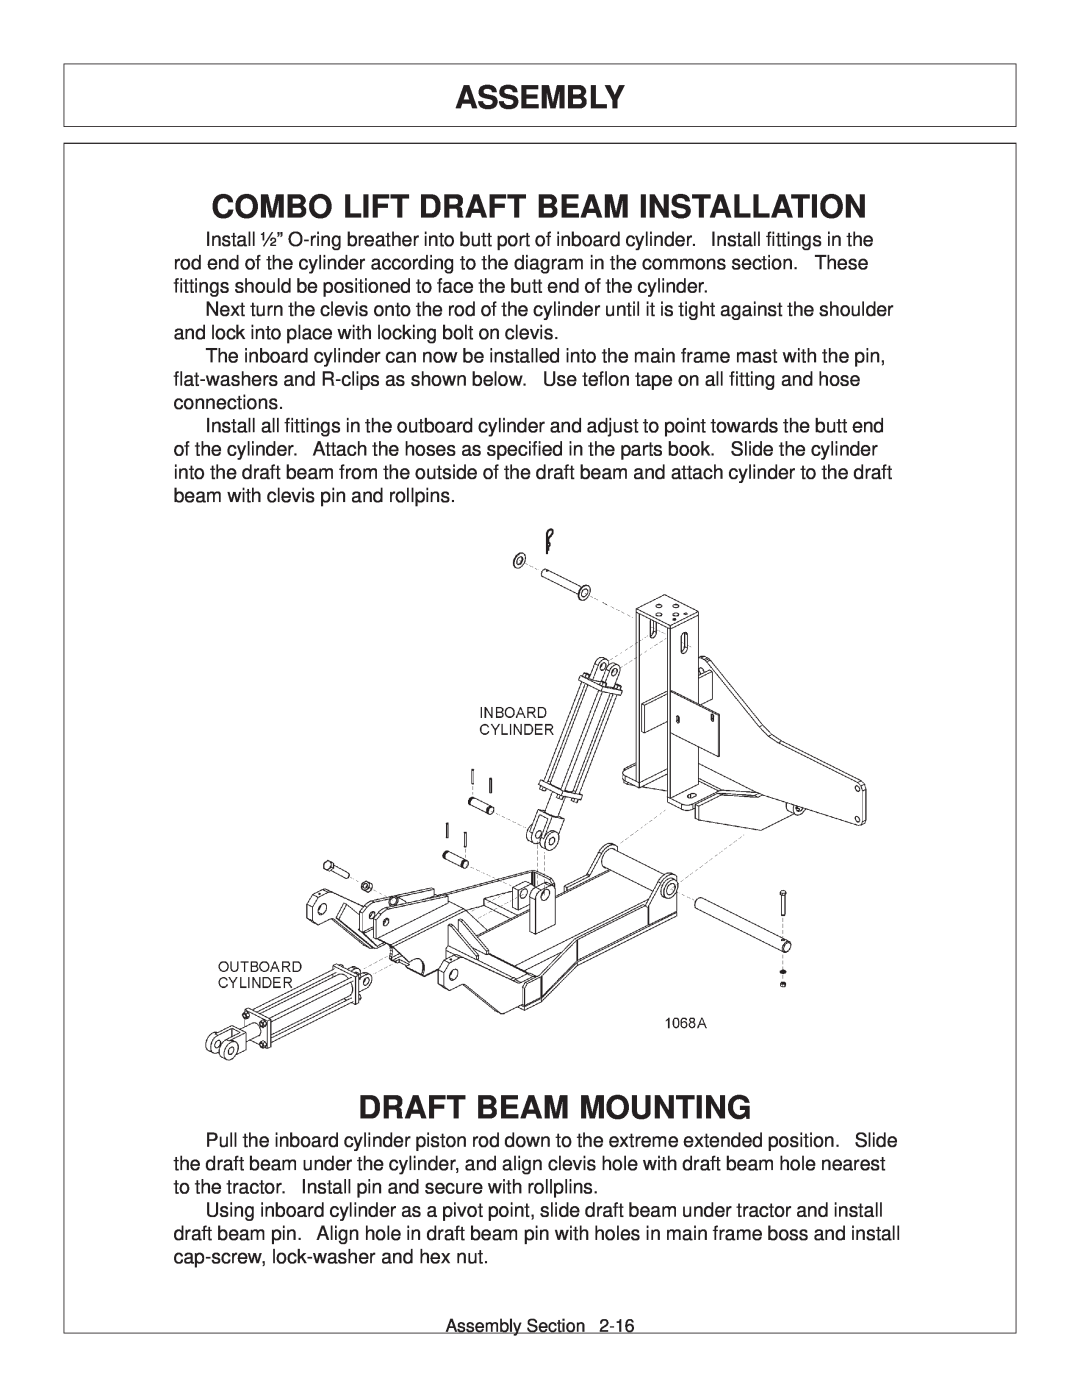 Tiger JD 5101E, JD 5083E, JD 5093E manual Combo Lift Draft Beam Installation, Draft Beam Mounting, Assembly 